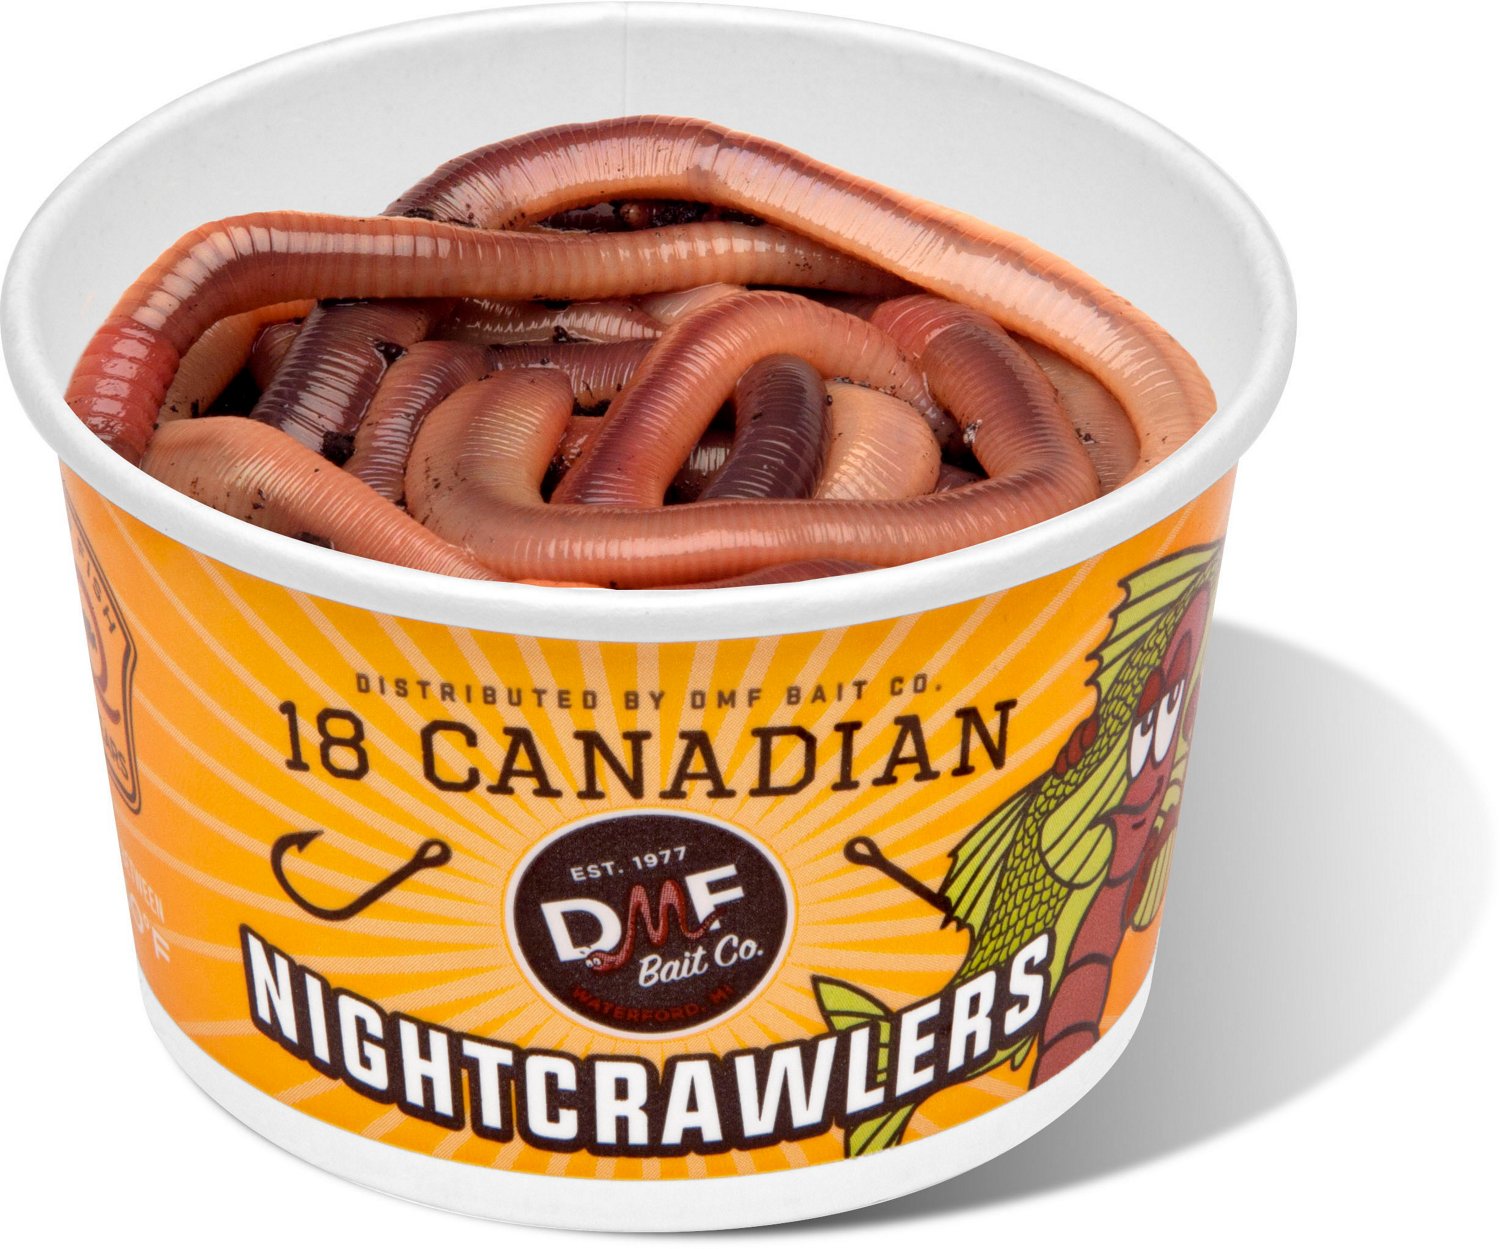 DMF Bait Canadian Nightcrawlers 18-ct